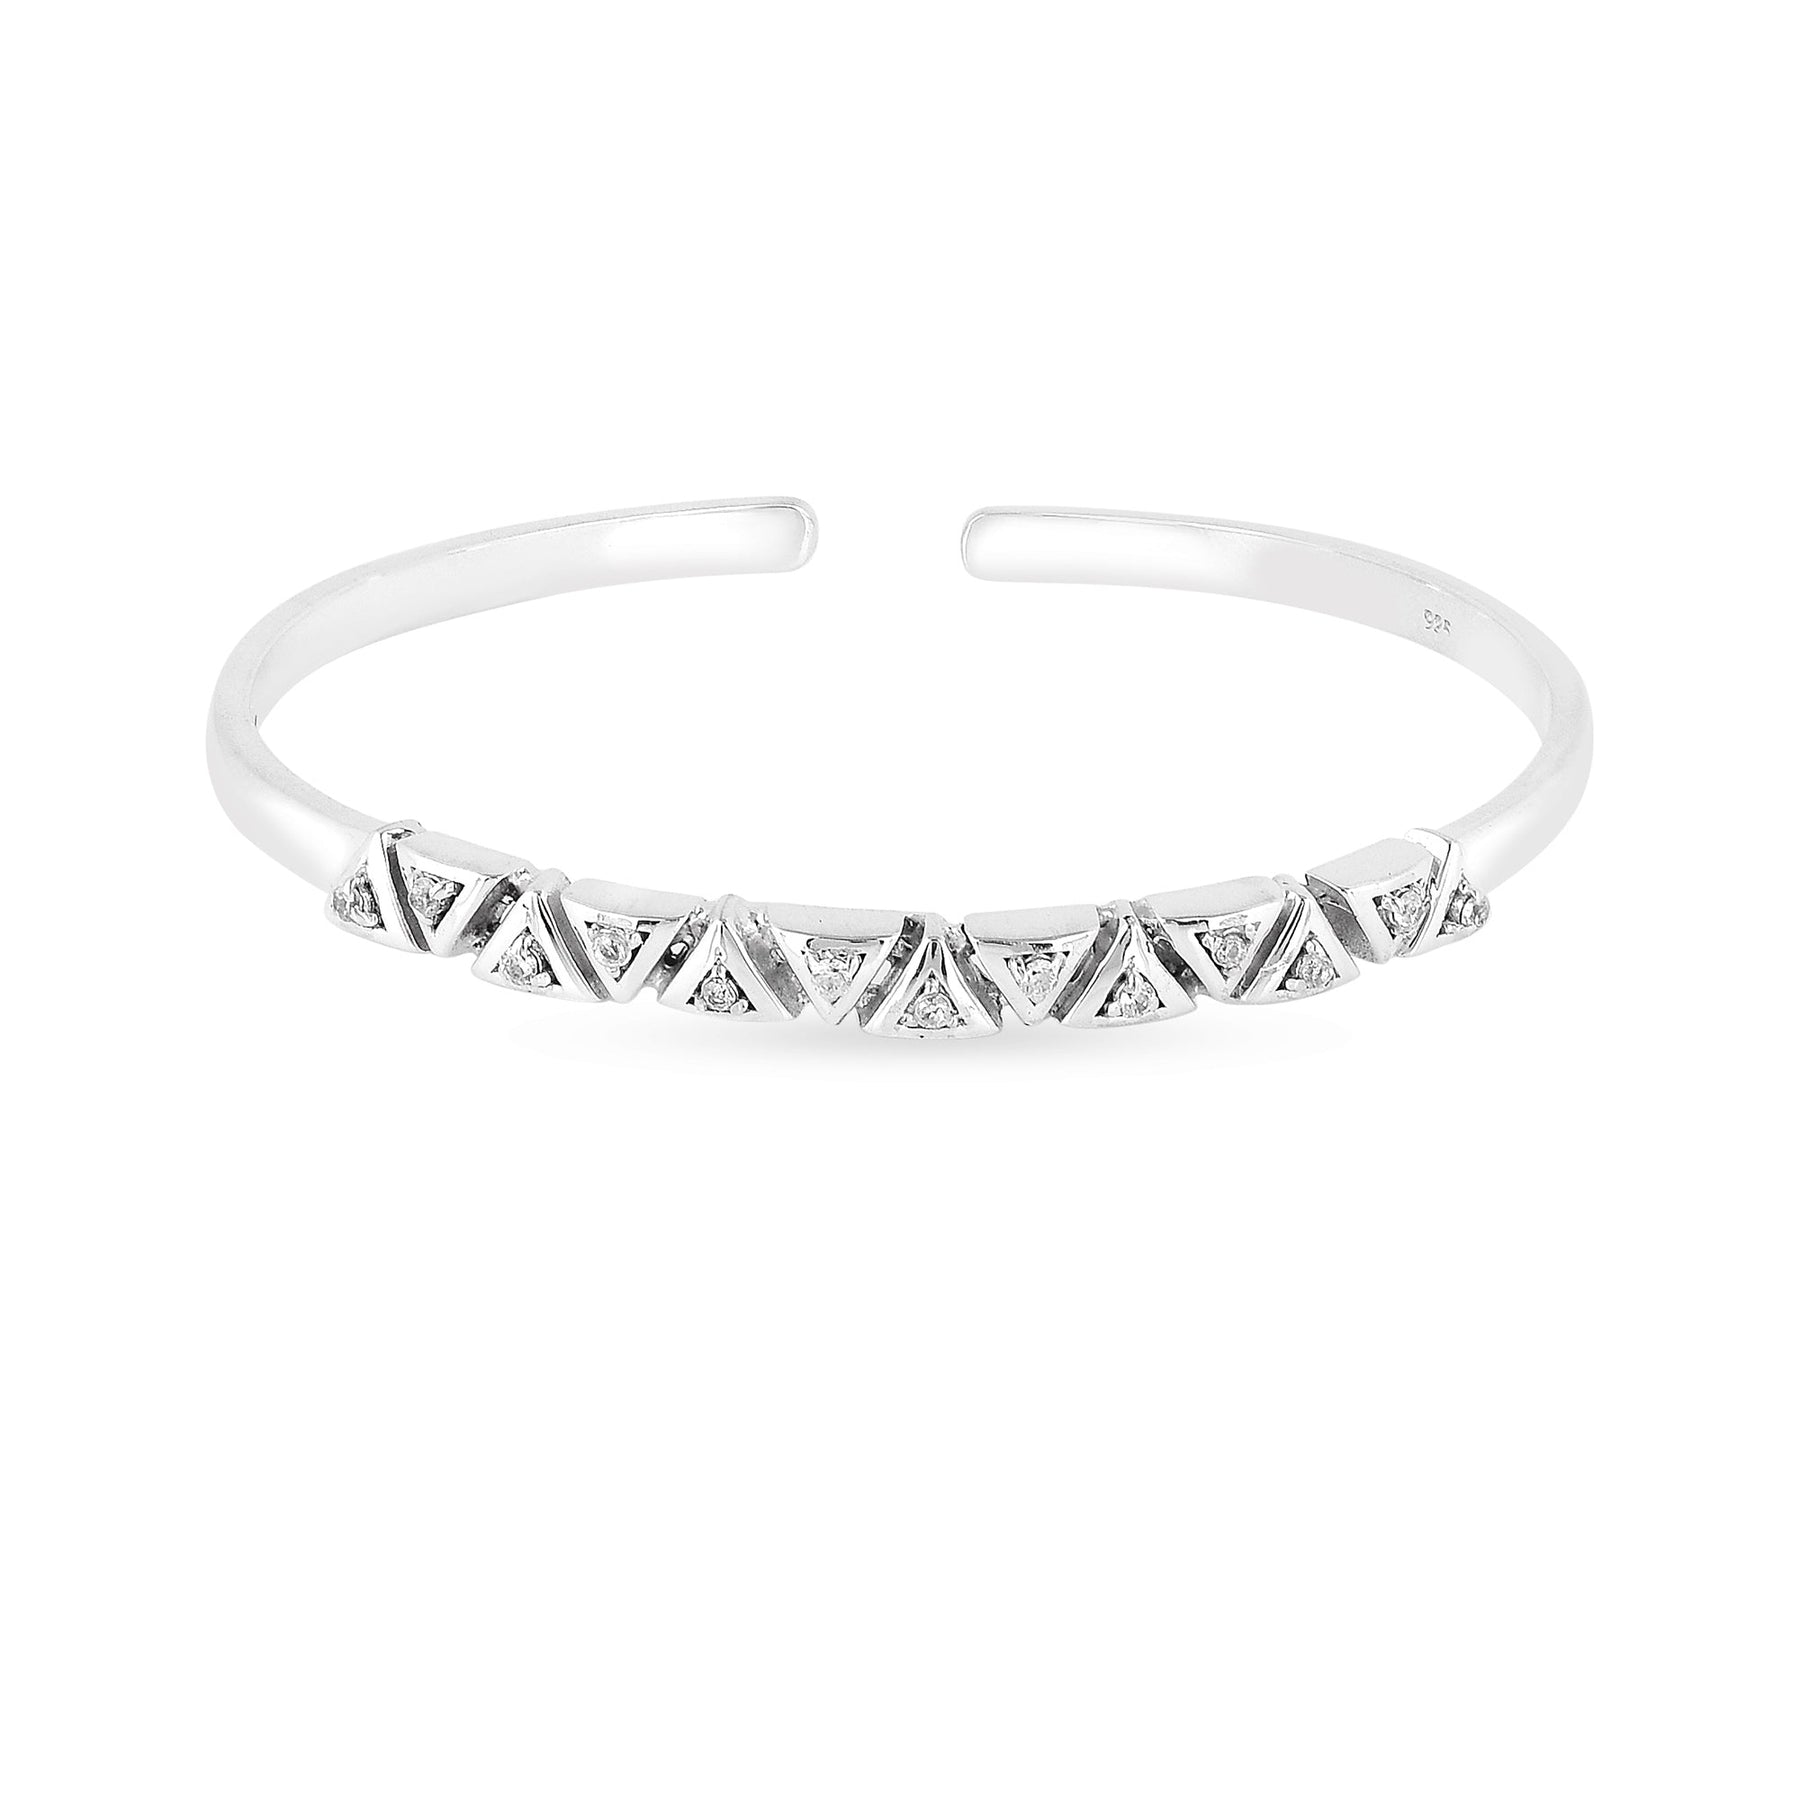 Triangular Design Cz Silver Bracelet